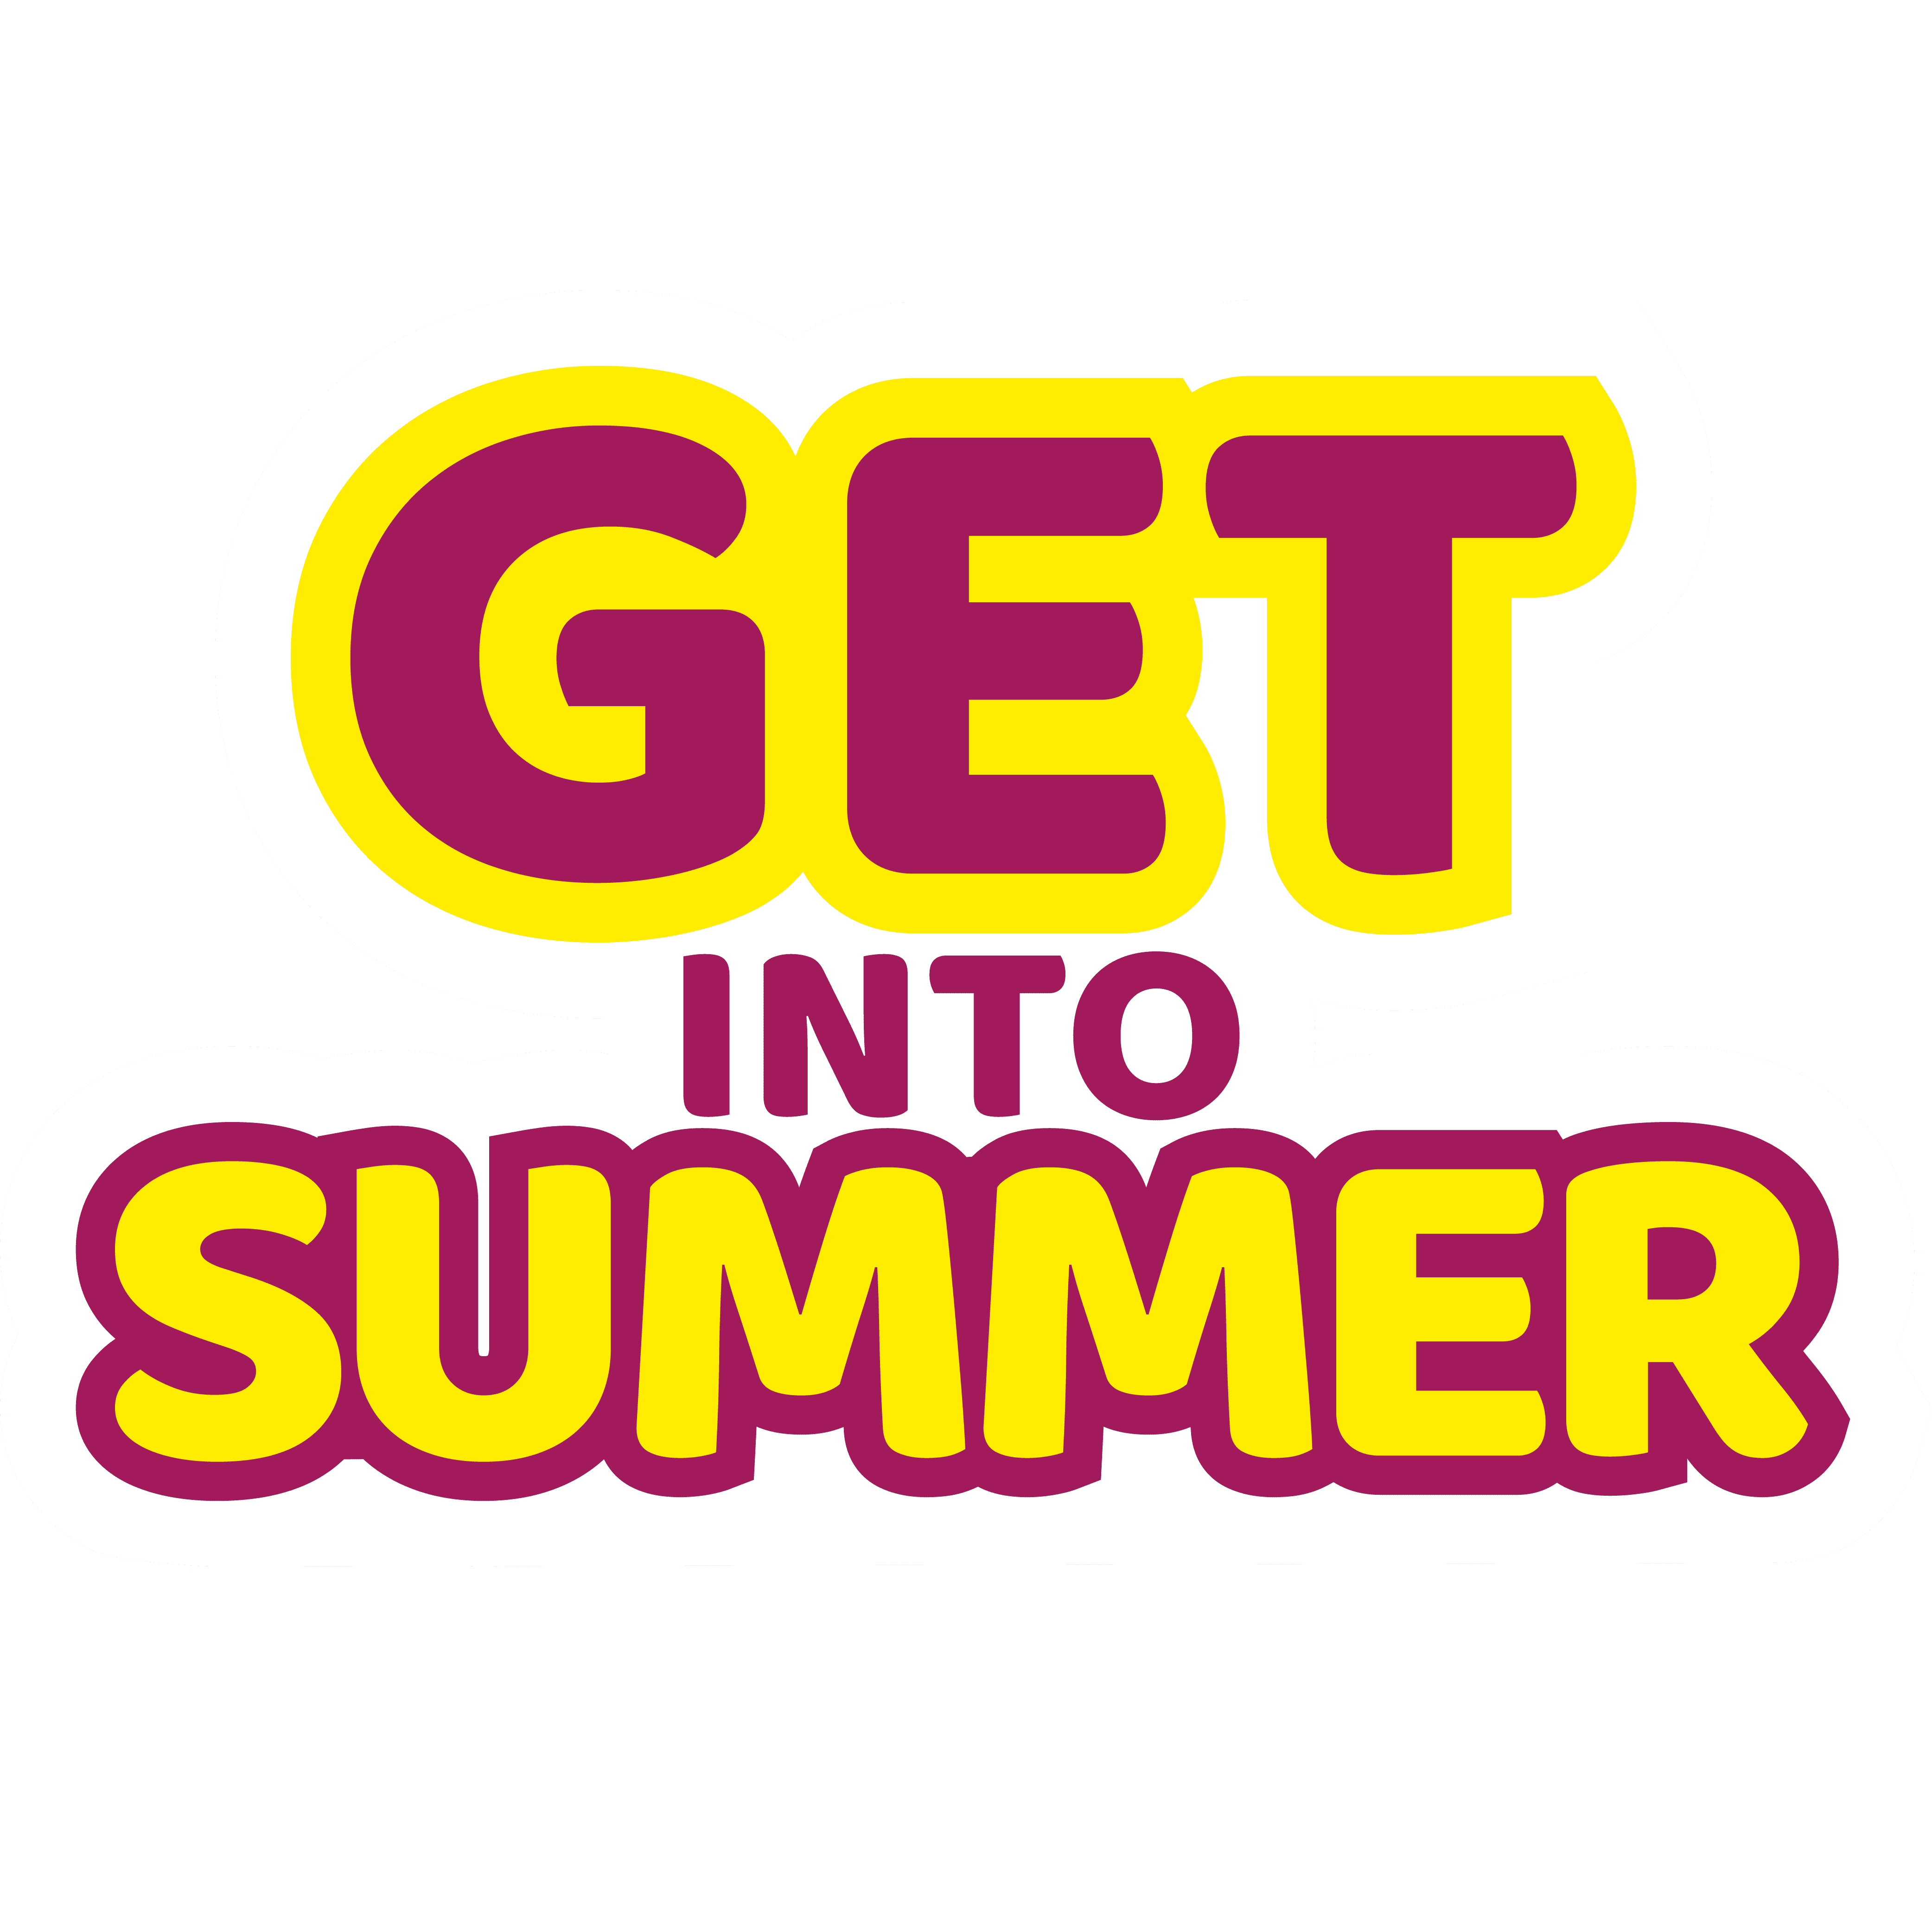 Parent Club - Get Into Summer logo ong